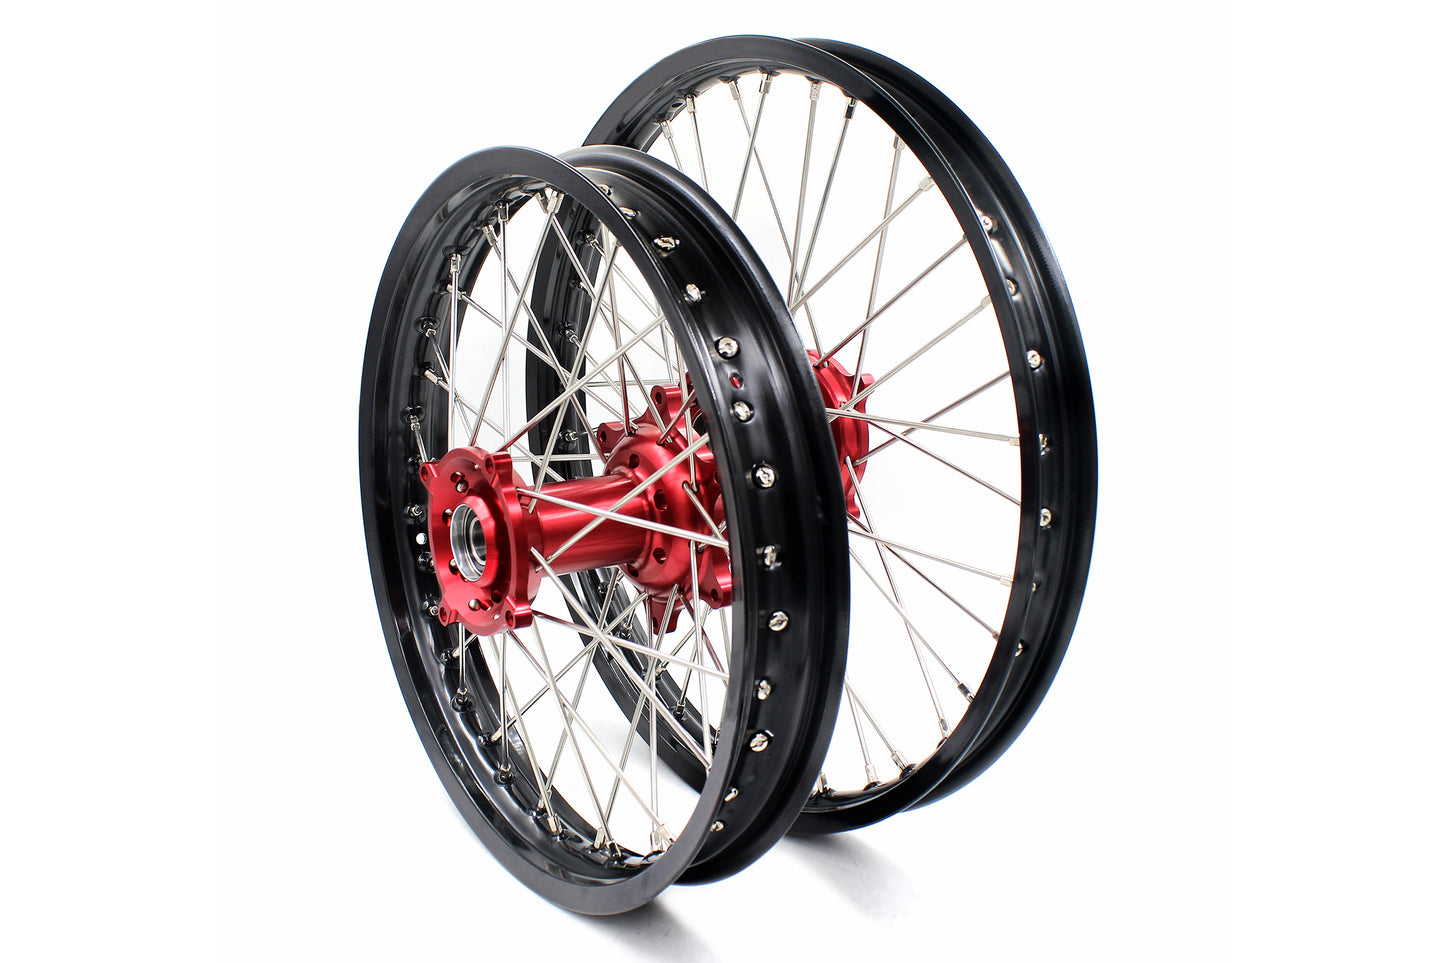 KKE 21 & 18 Enduro Wheels Rims for Husqvarna TE TC FE FC SMR TXC  2000-2013 Red Hubs